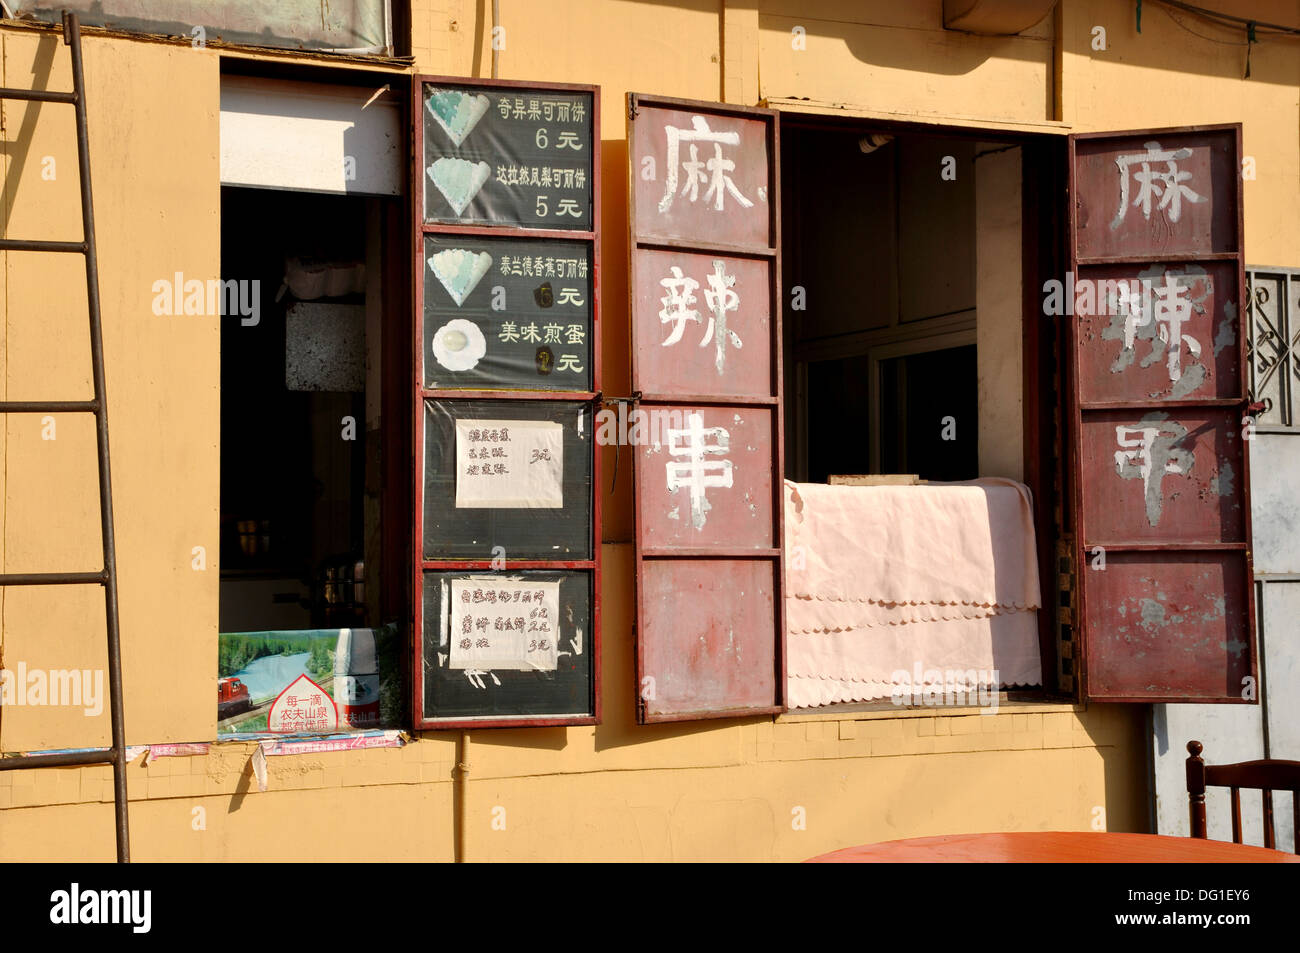 Small neighbourhood restaurant, Qingdao, Shandong, China. Stock Photo